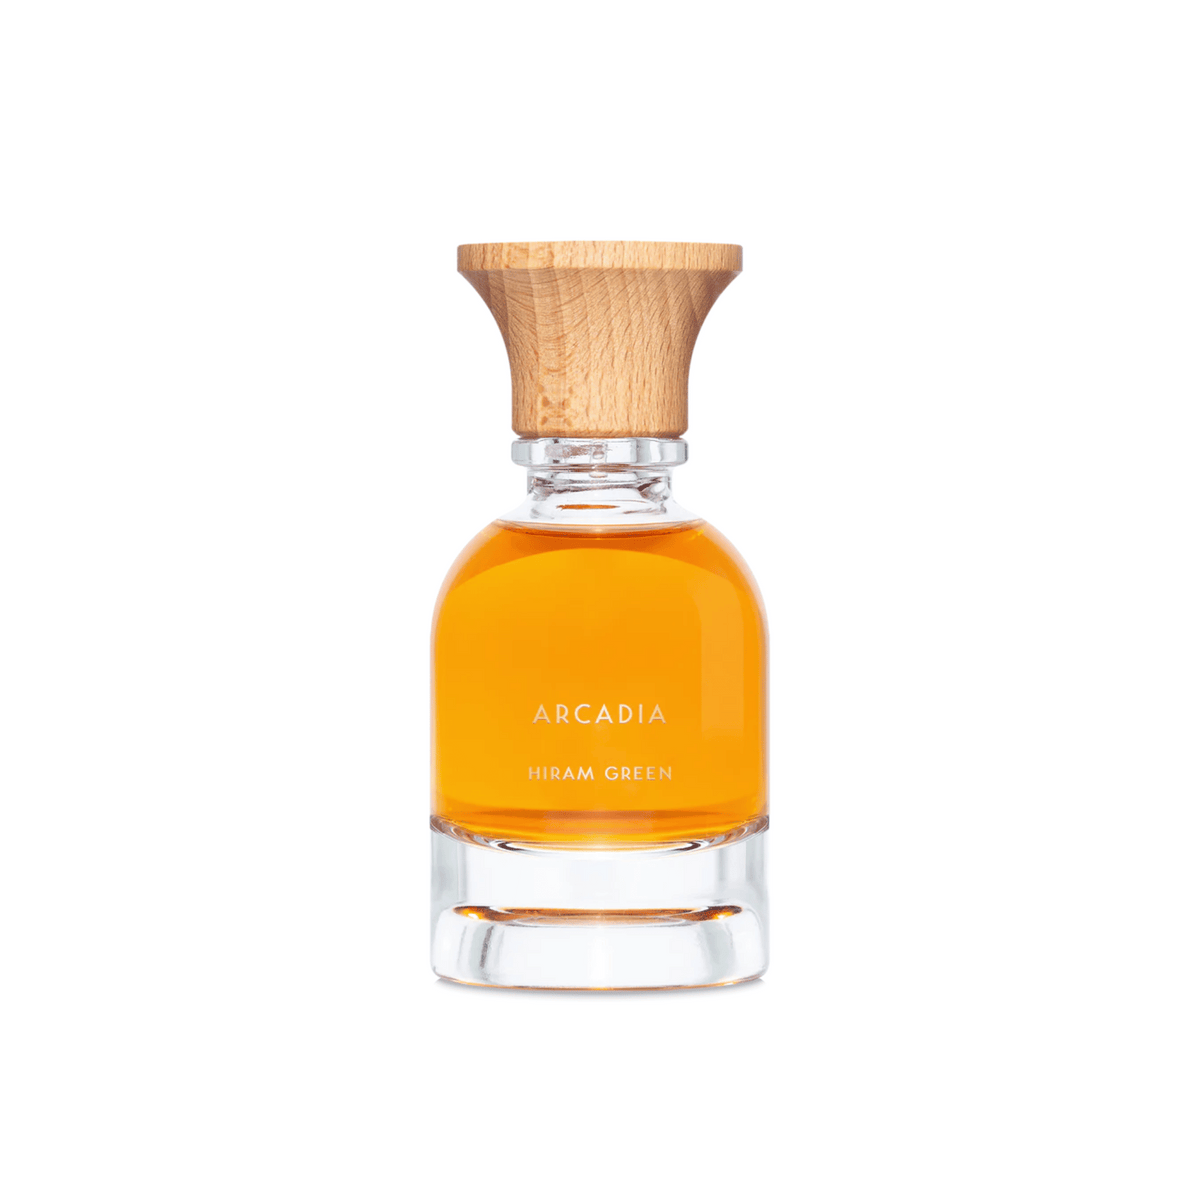 Primary Image of Arcadia Eau De Parfum